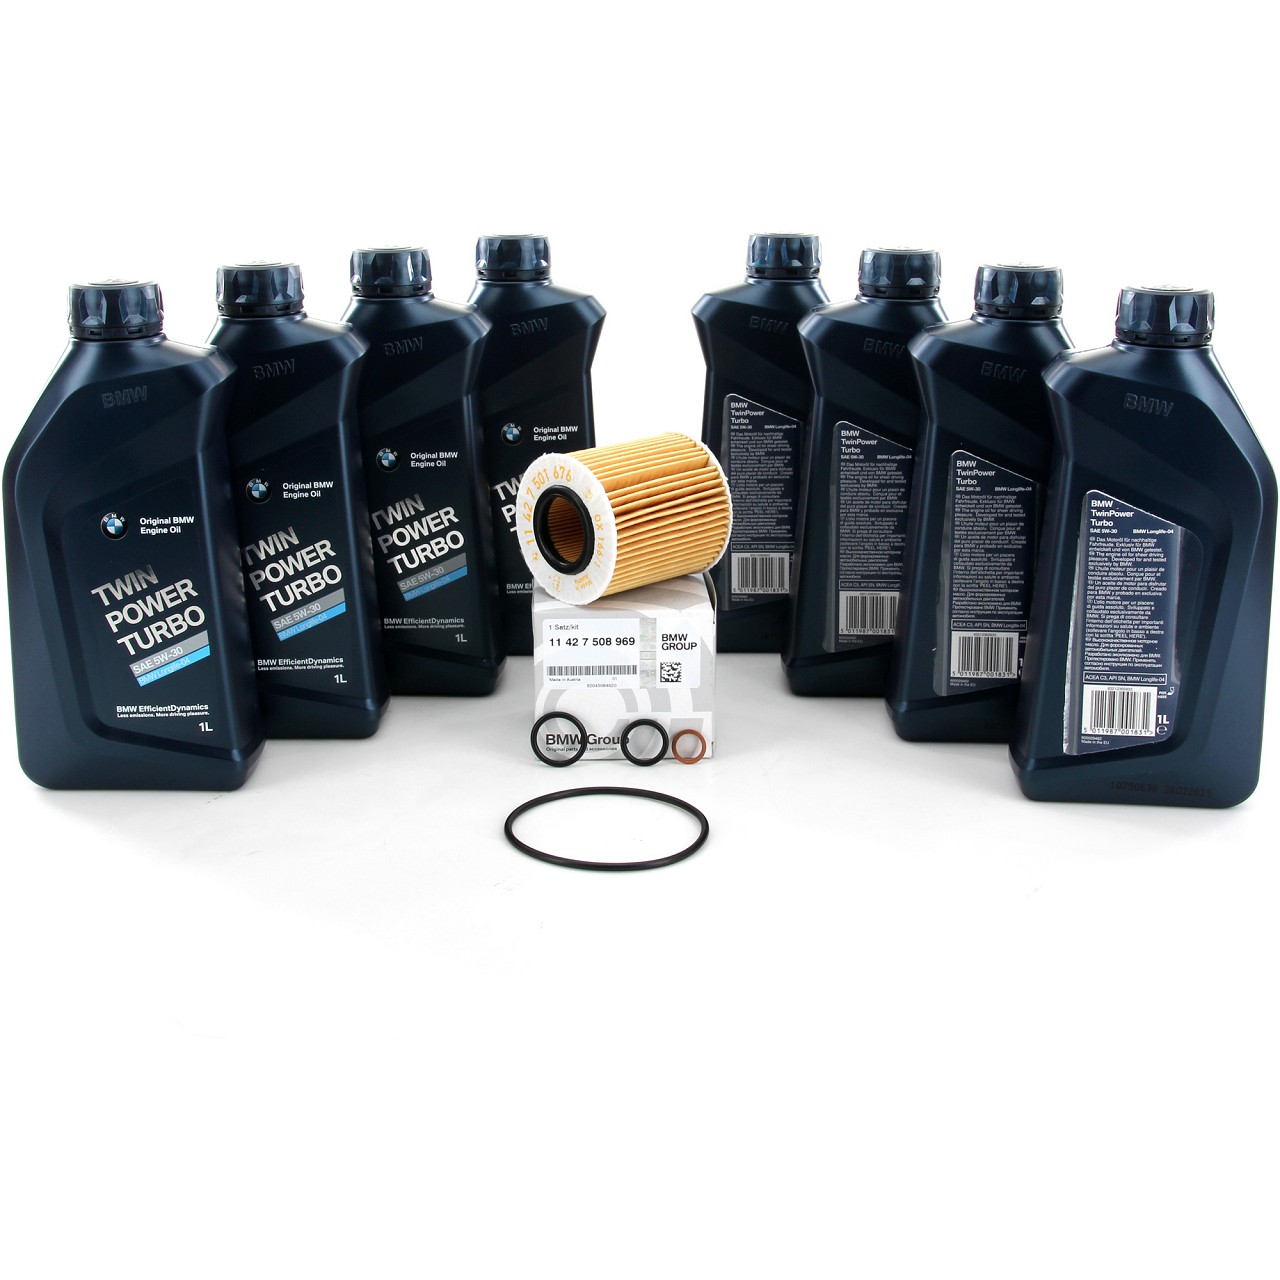 ORIGINAL BMW Motoröl Öl 5W30 LongLife-04 8 Liter + Ölfilter 11427508969